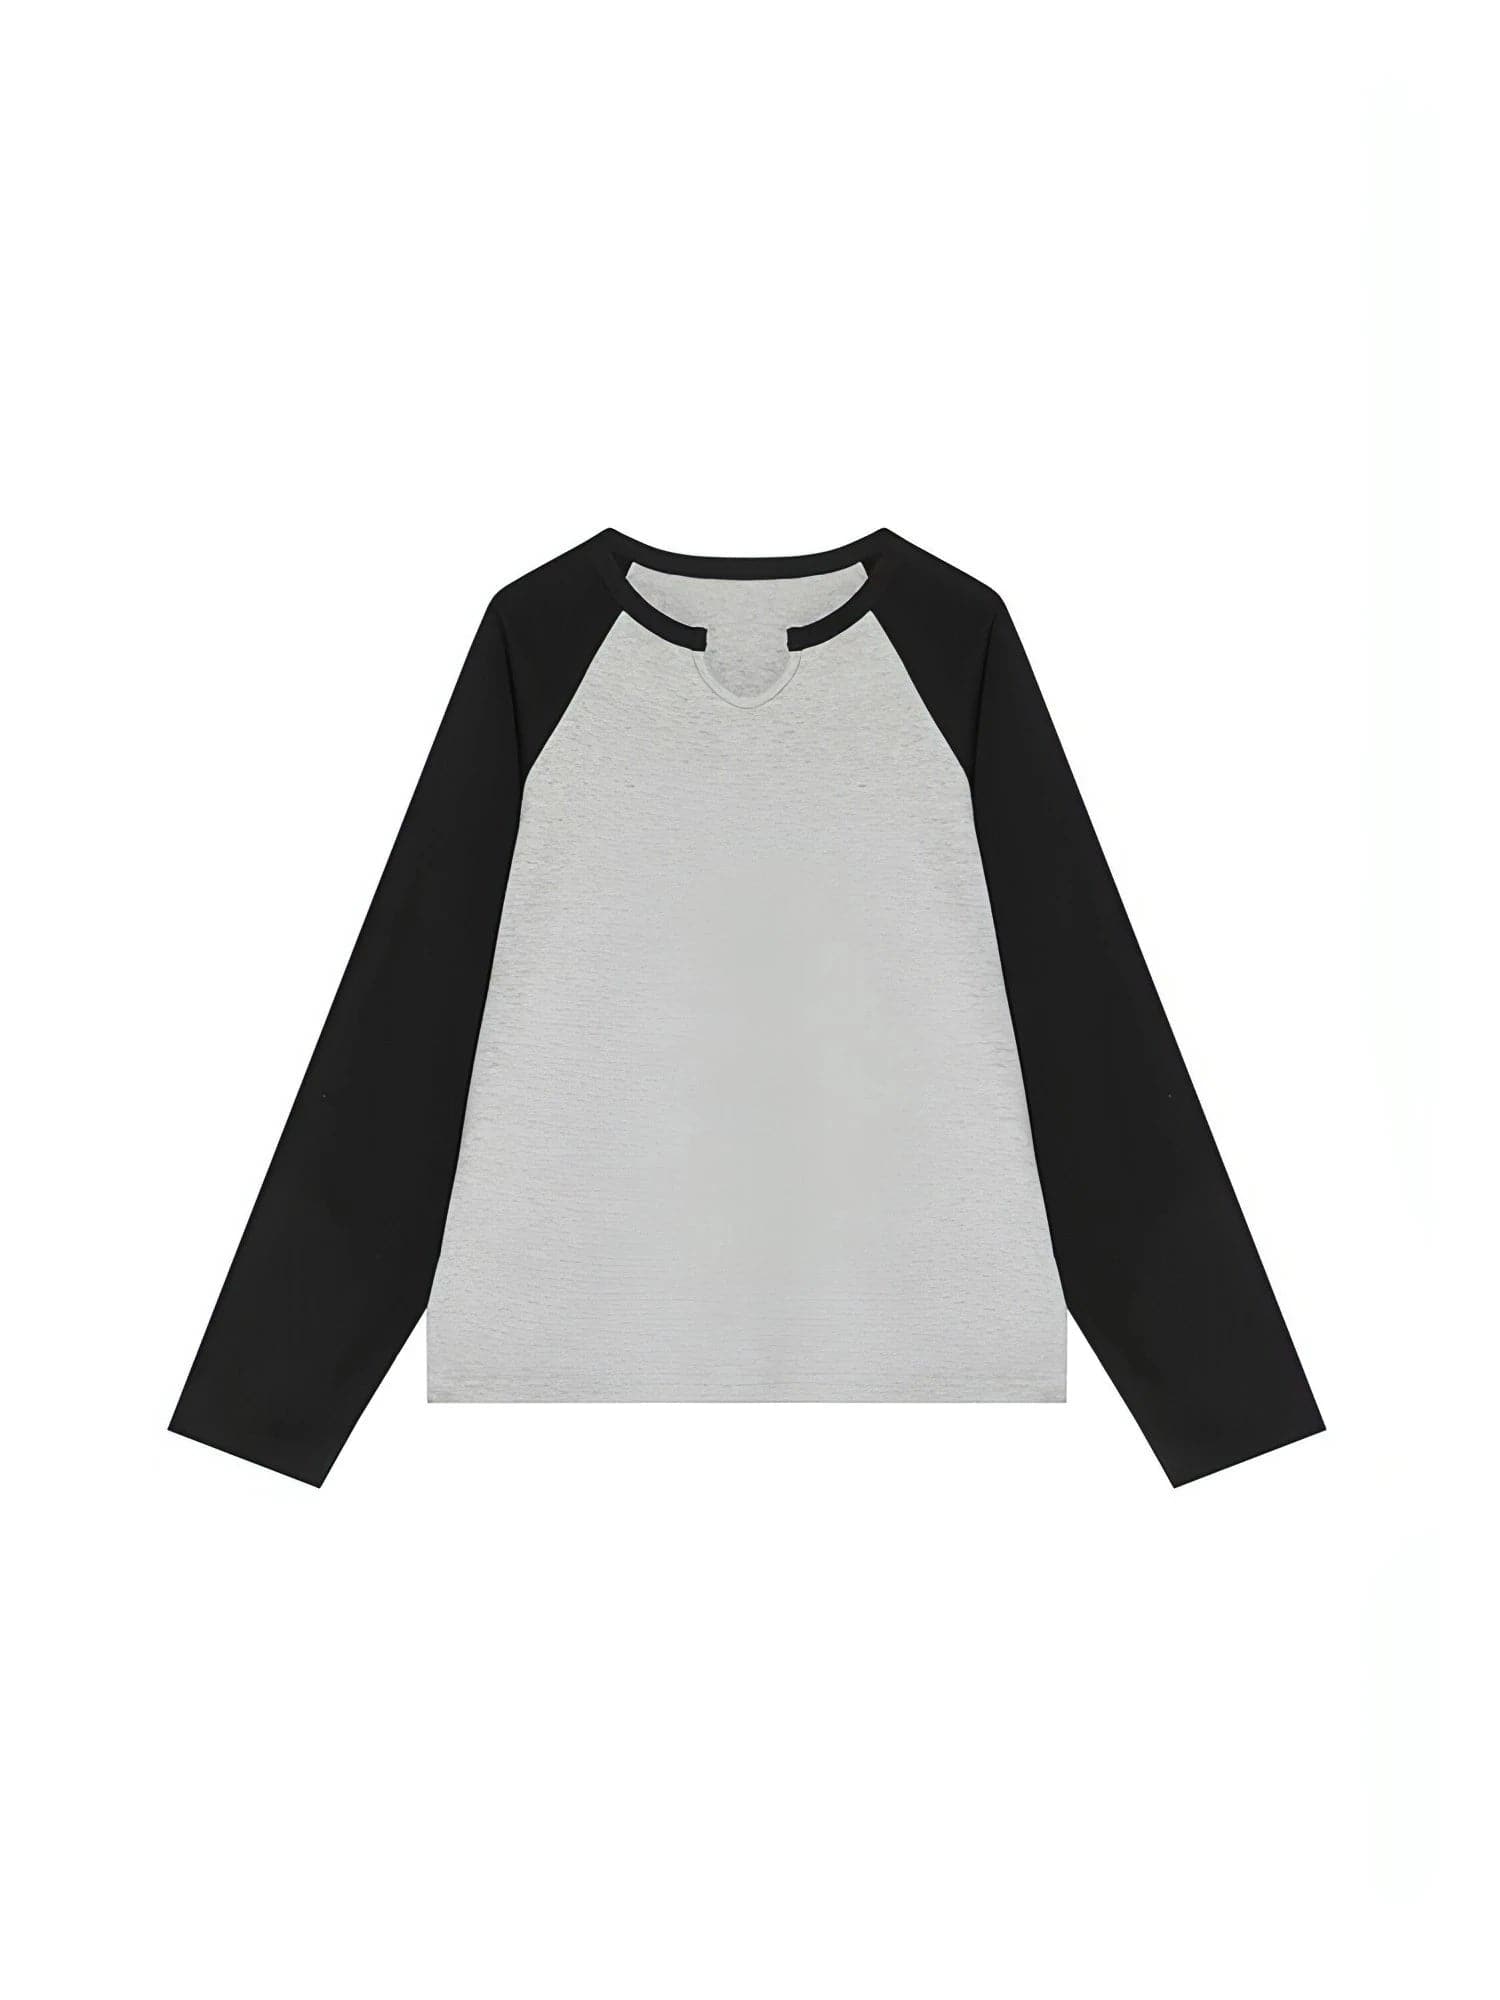 Black And White Contrast U-Neck Drop Shoulder T-Shirt - chiclara